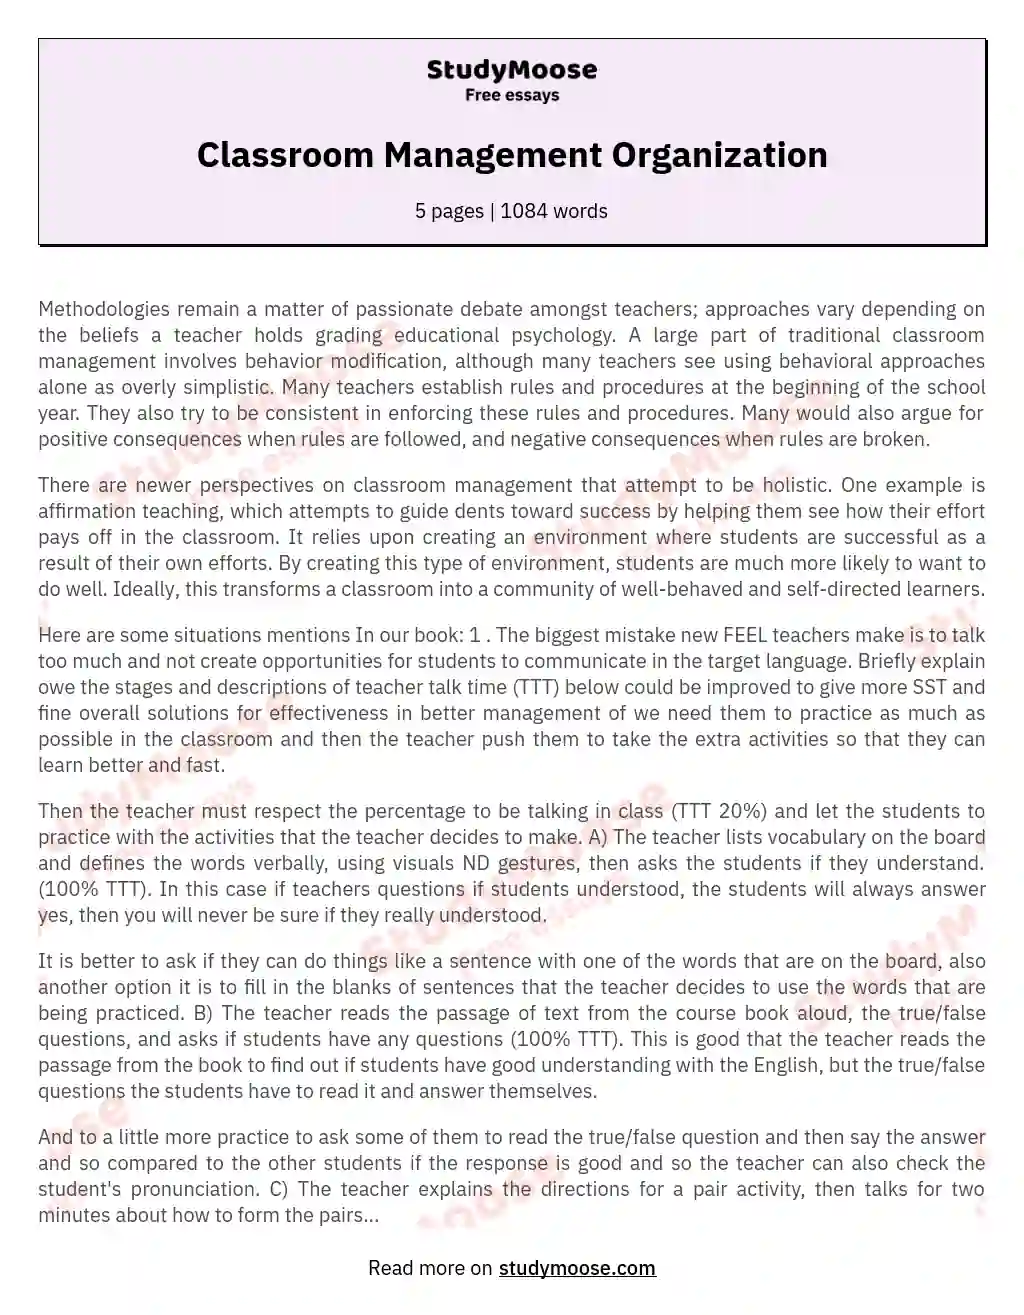 Classroom Management Organization essay